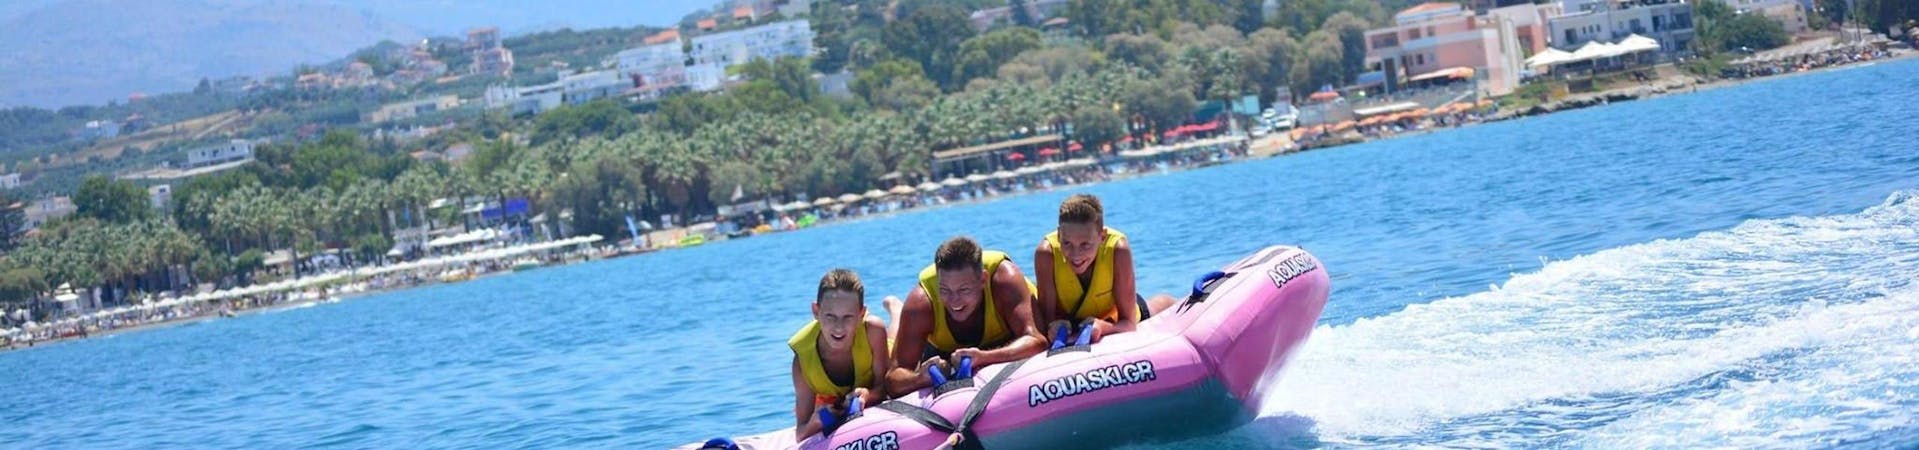 Une famille s'amuse pendant sa Sortie en Airstream à Agia Marina avec Cactus Water Sports Center.